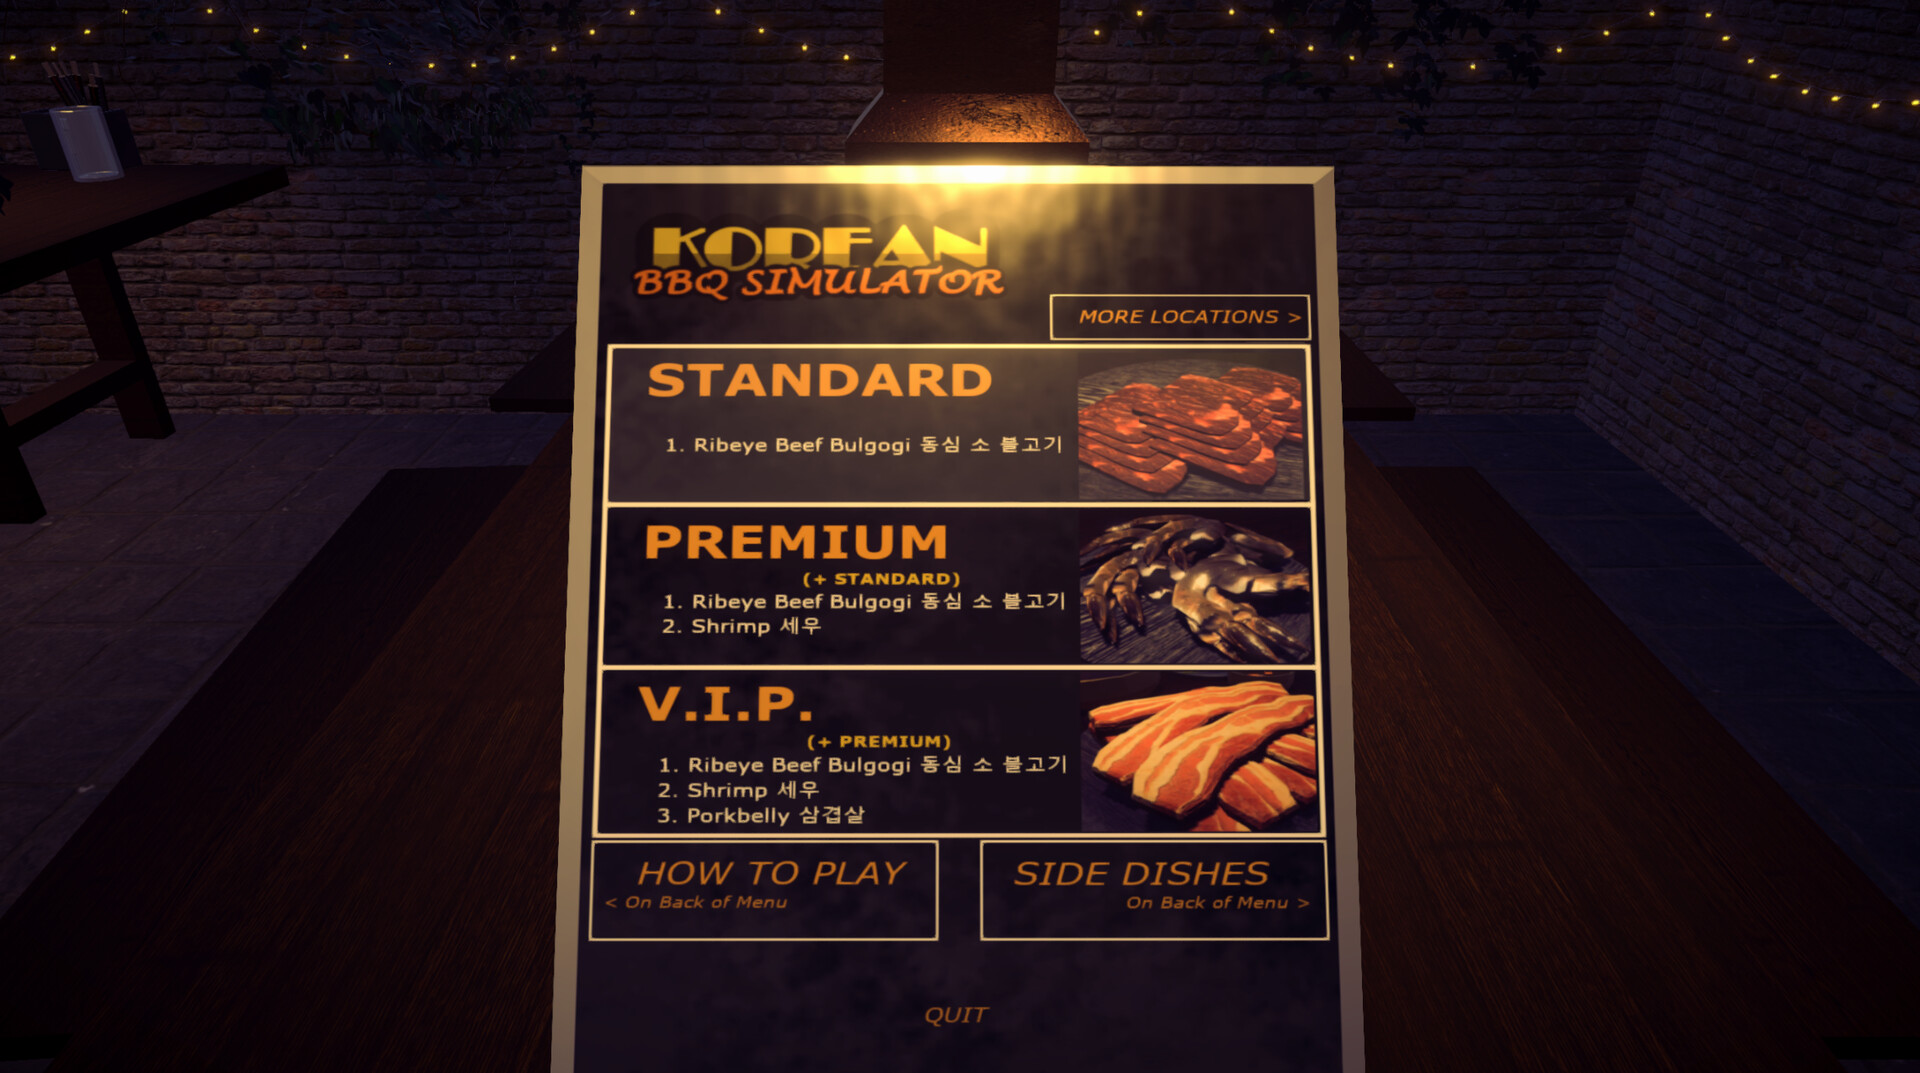 Korean BBQ Simulator Steam CD Key [USD 4.42]